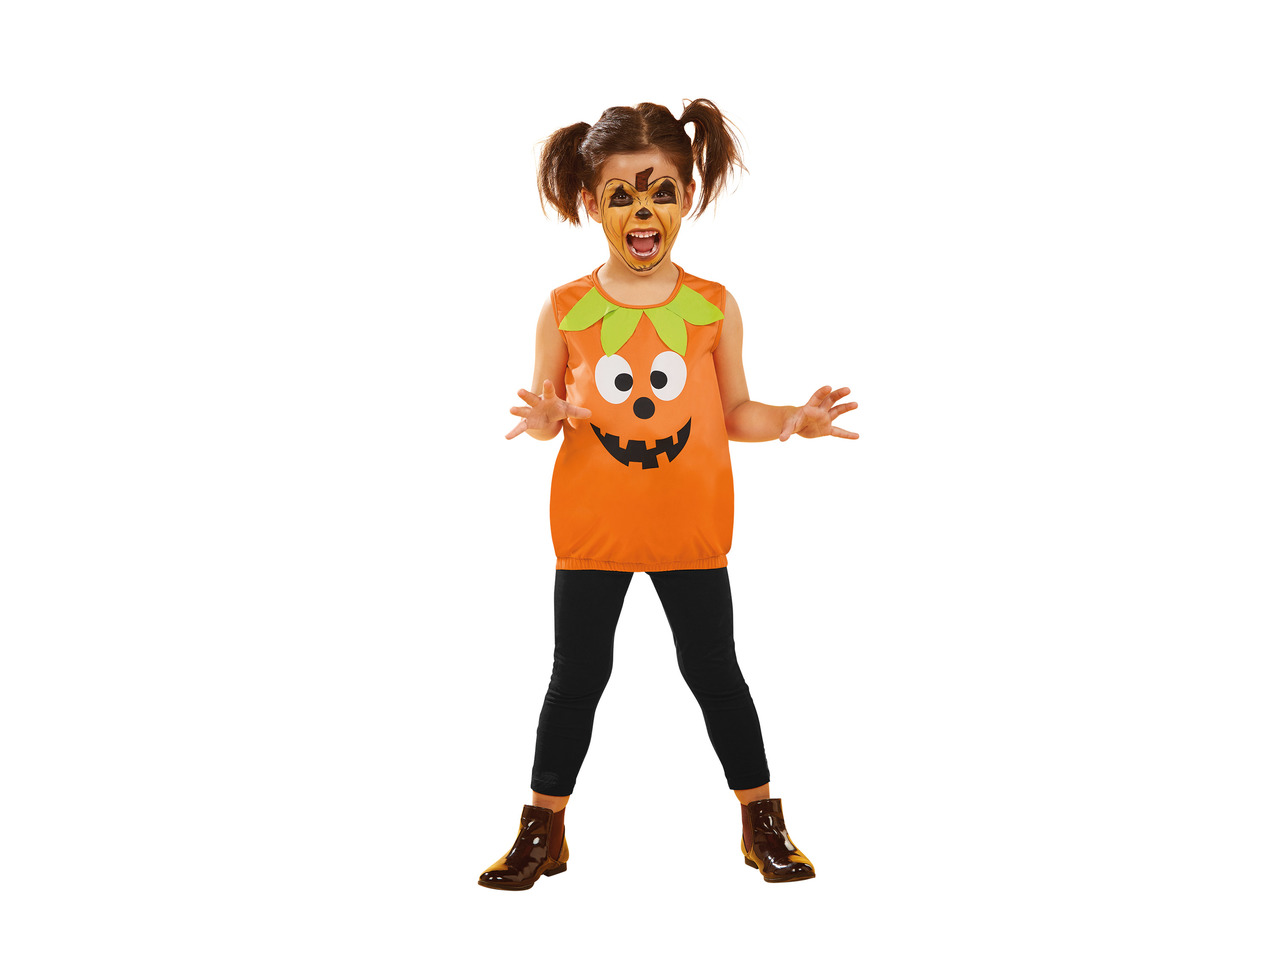 Younger Girls' Halloween Costume1